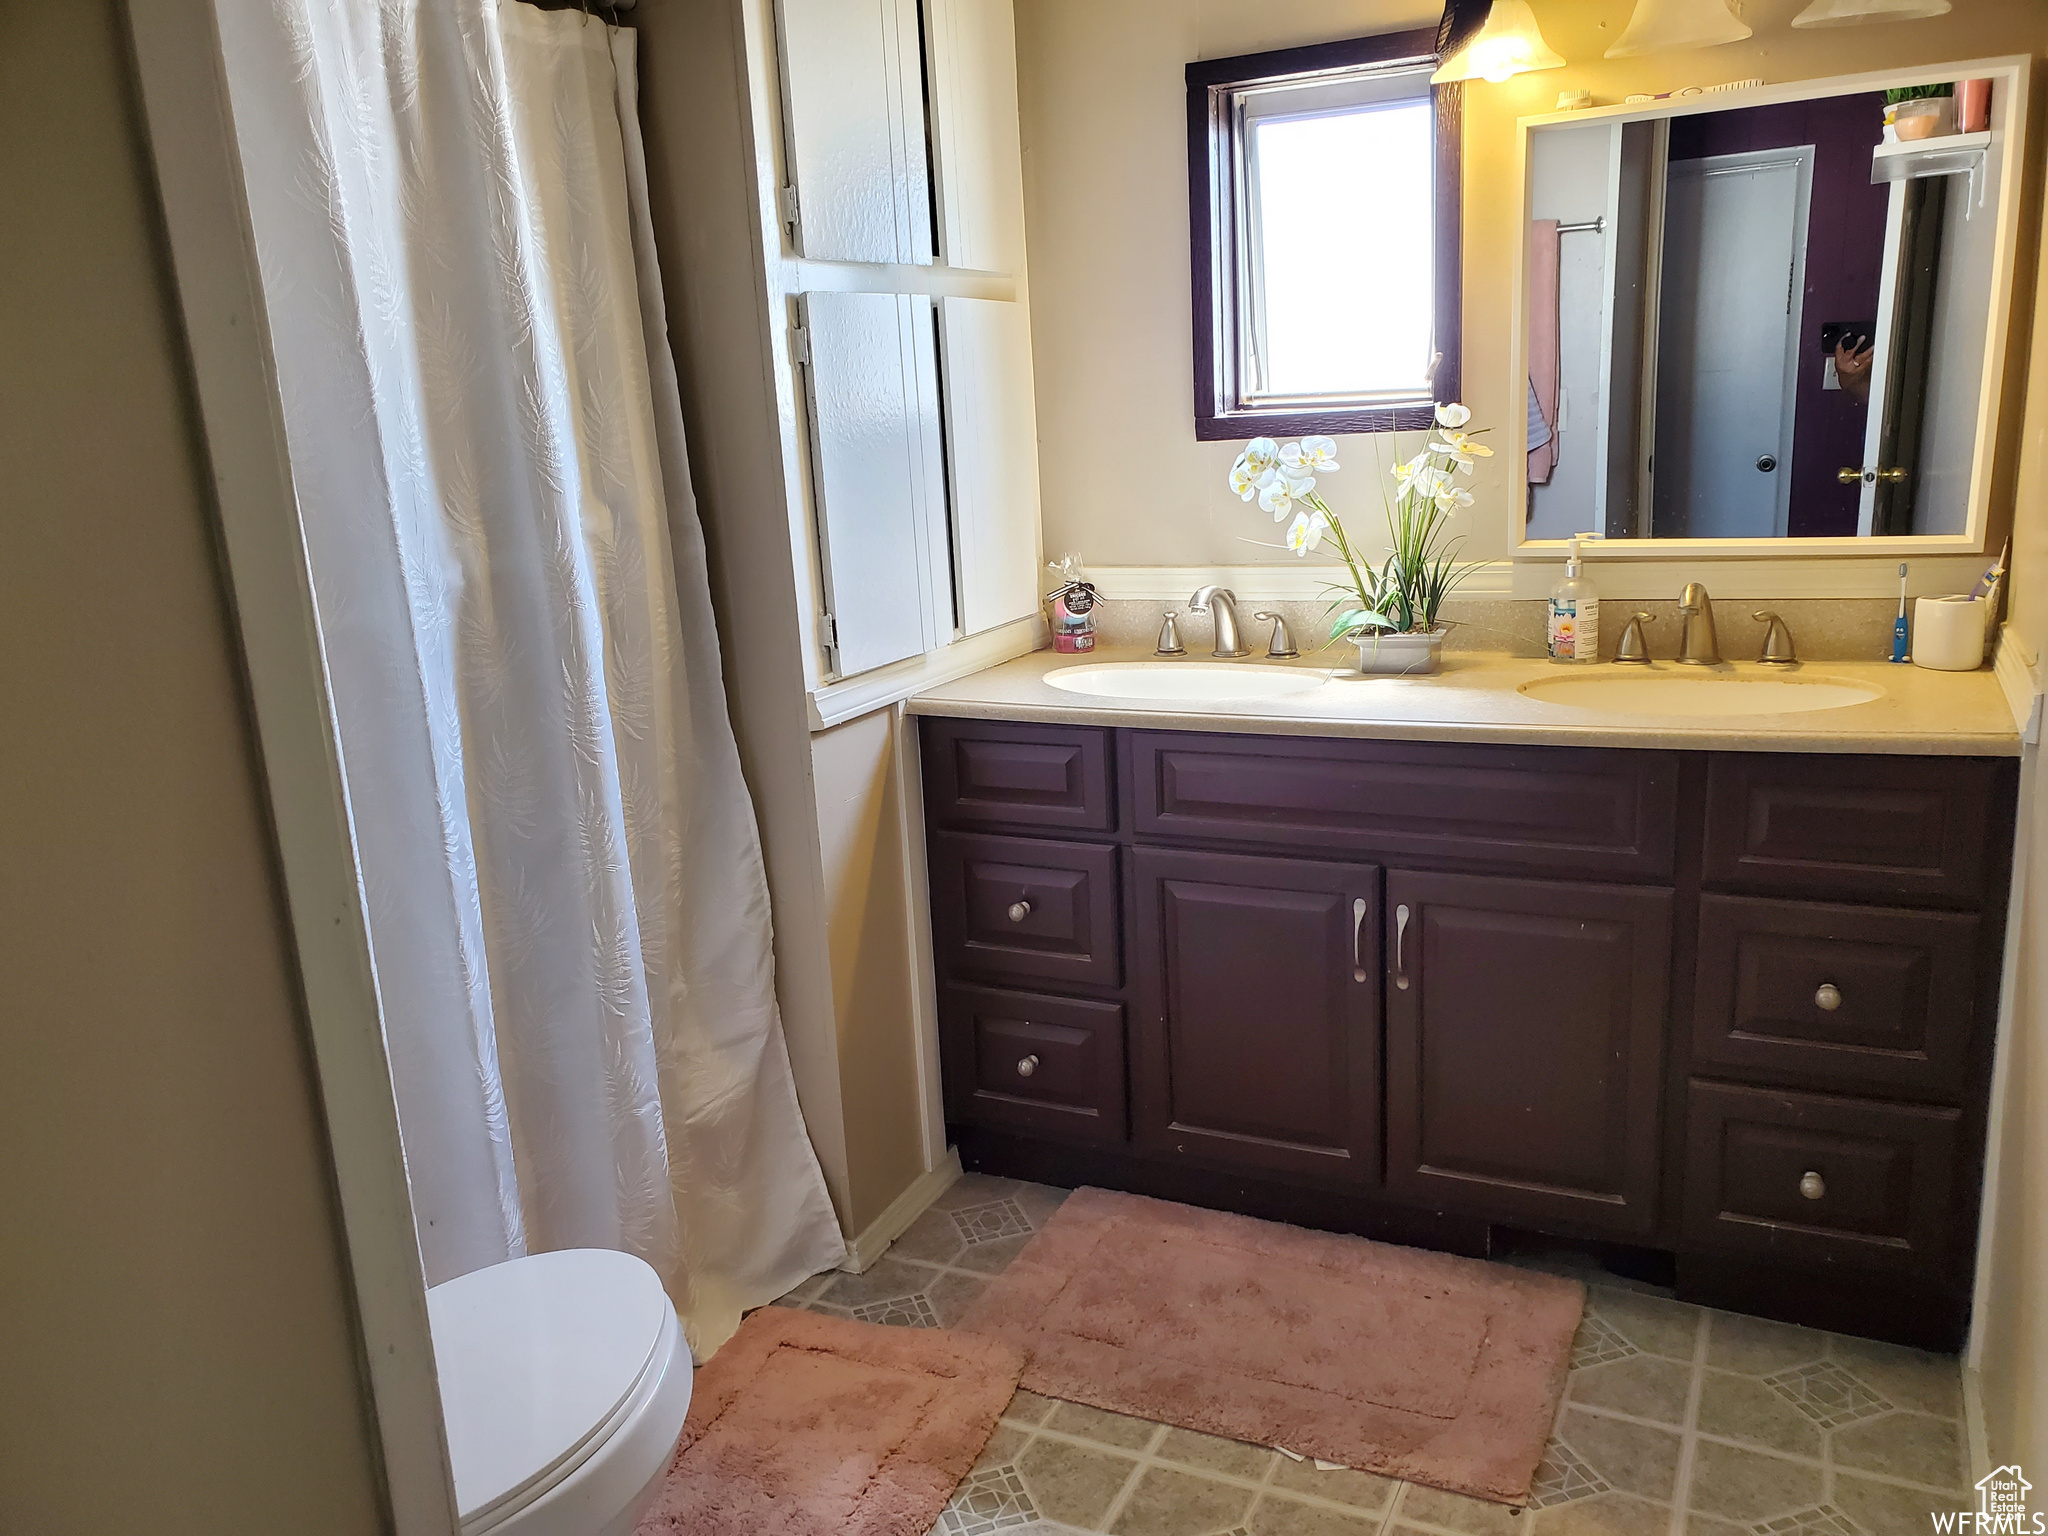 Bathroom with tile floors, toilet, and dual vanity